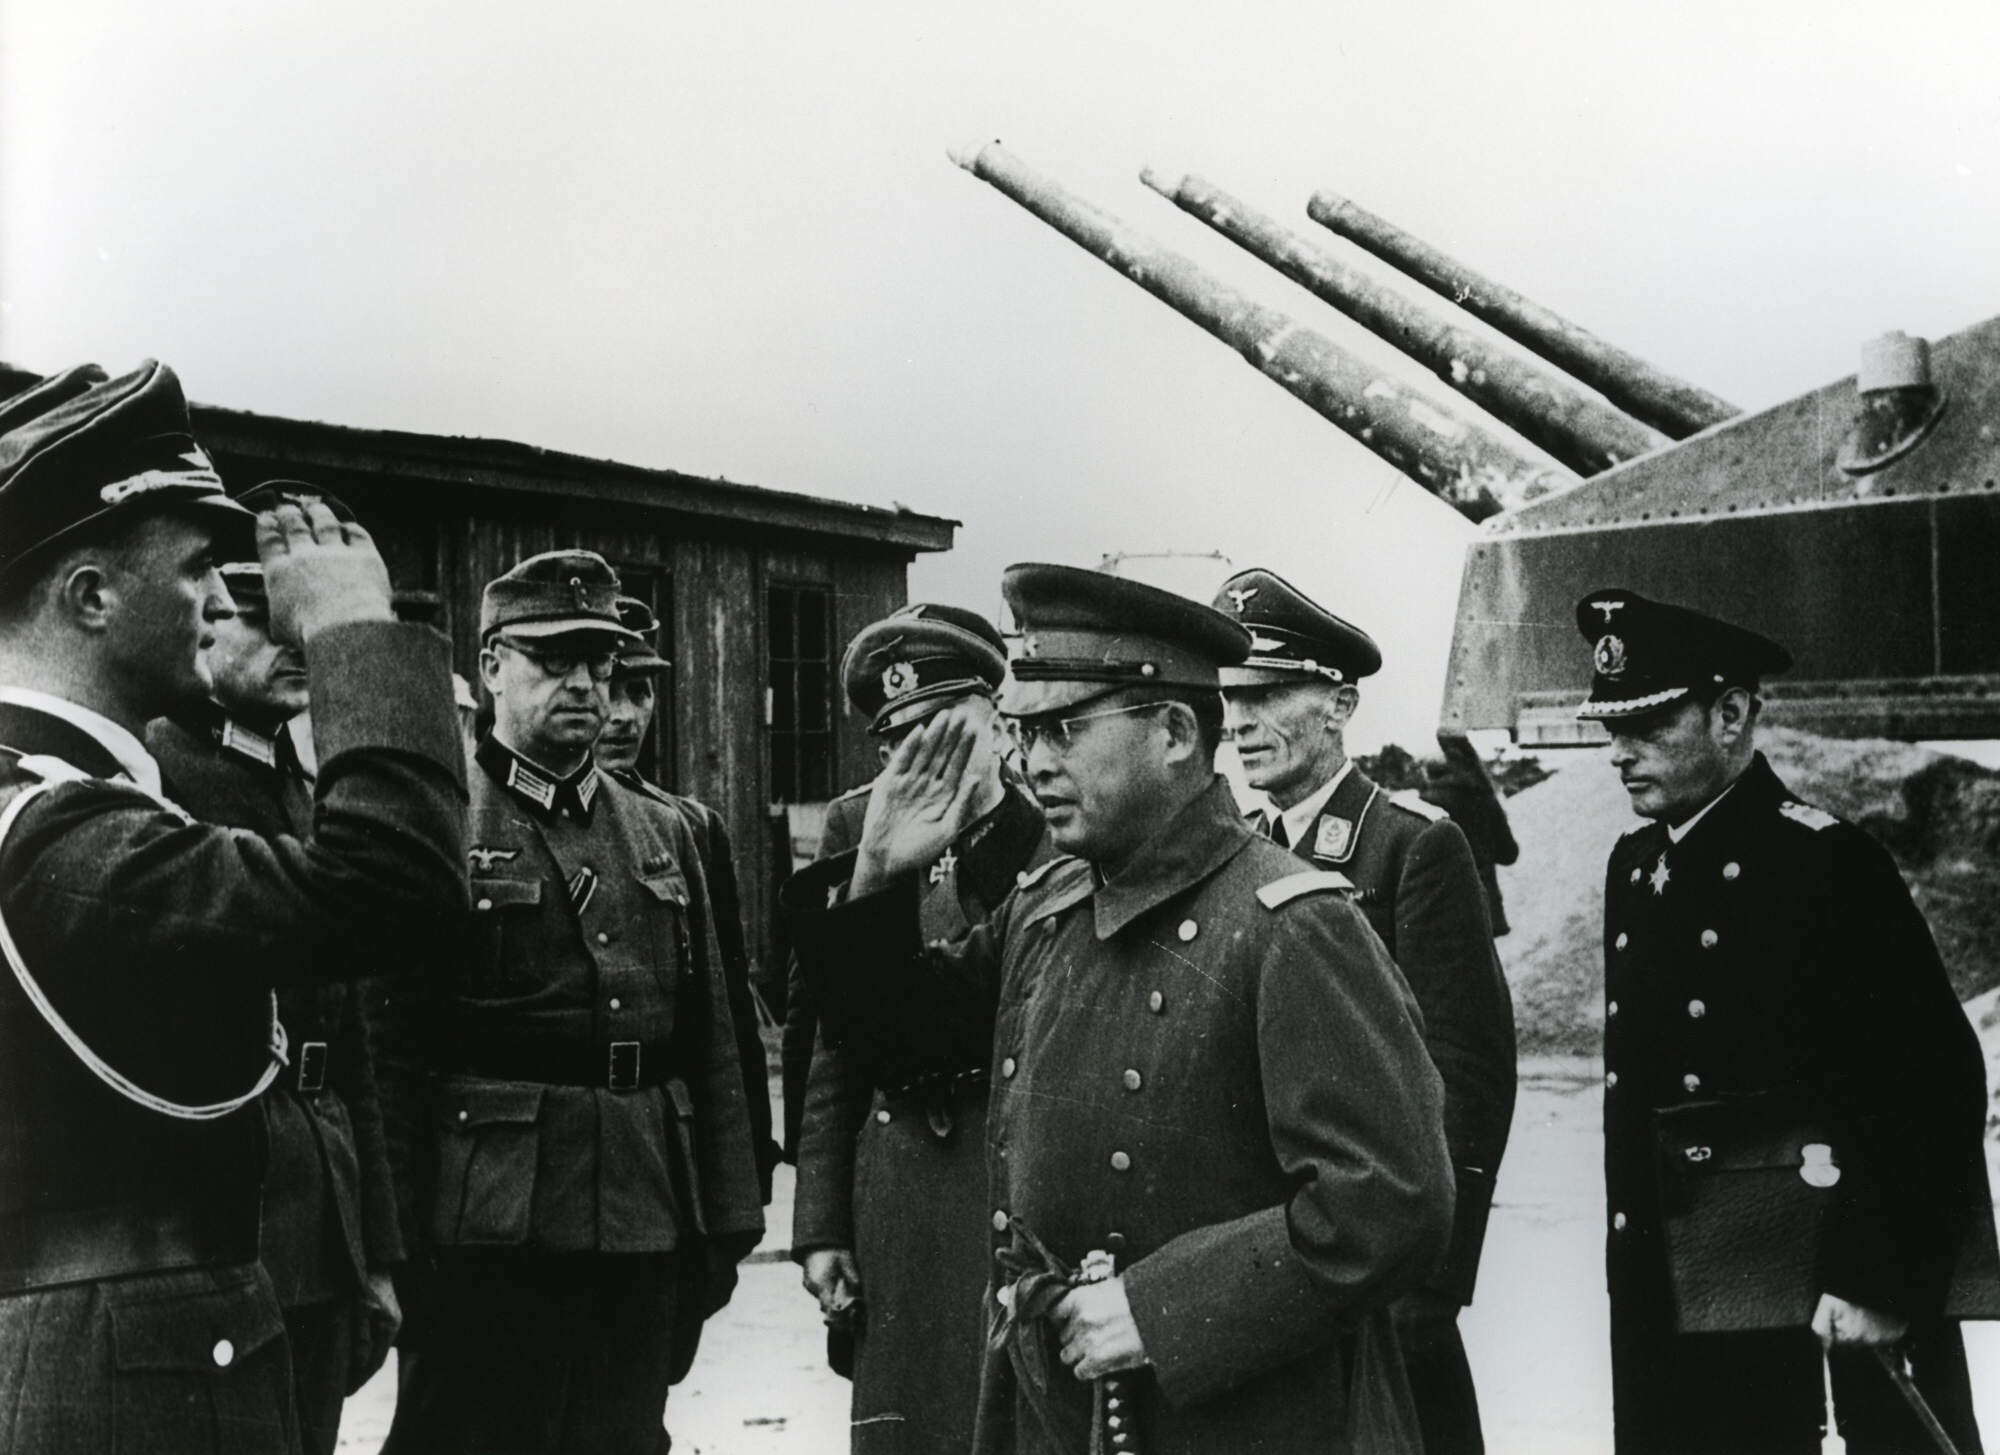 Japanese military attaché Makoto Onodera visiting the Fjell Festning fortification in Norway with Eberhard von Zedlitz, Robert Morath, and Nikolaus von Falkenhorst, 26 Dec 1942